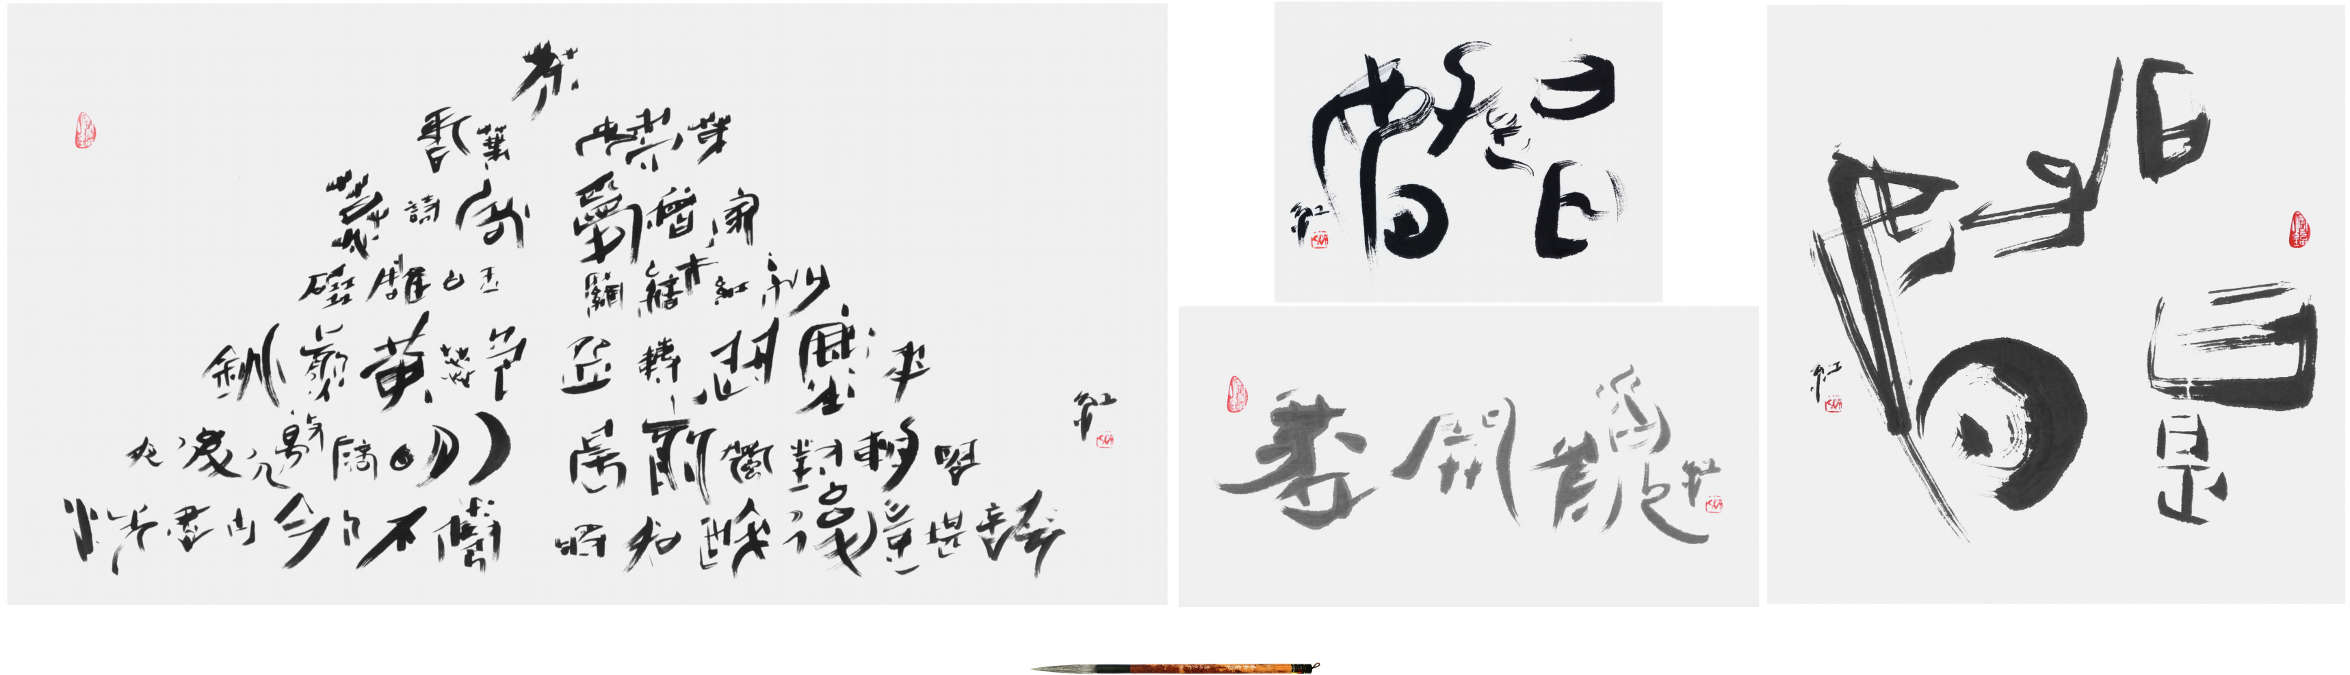 Sai Koh (Qi Hong)’s Freehand Brushwork Chinese Calligraphy: semi-seal script, light ink calligraphy